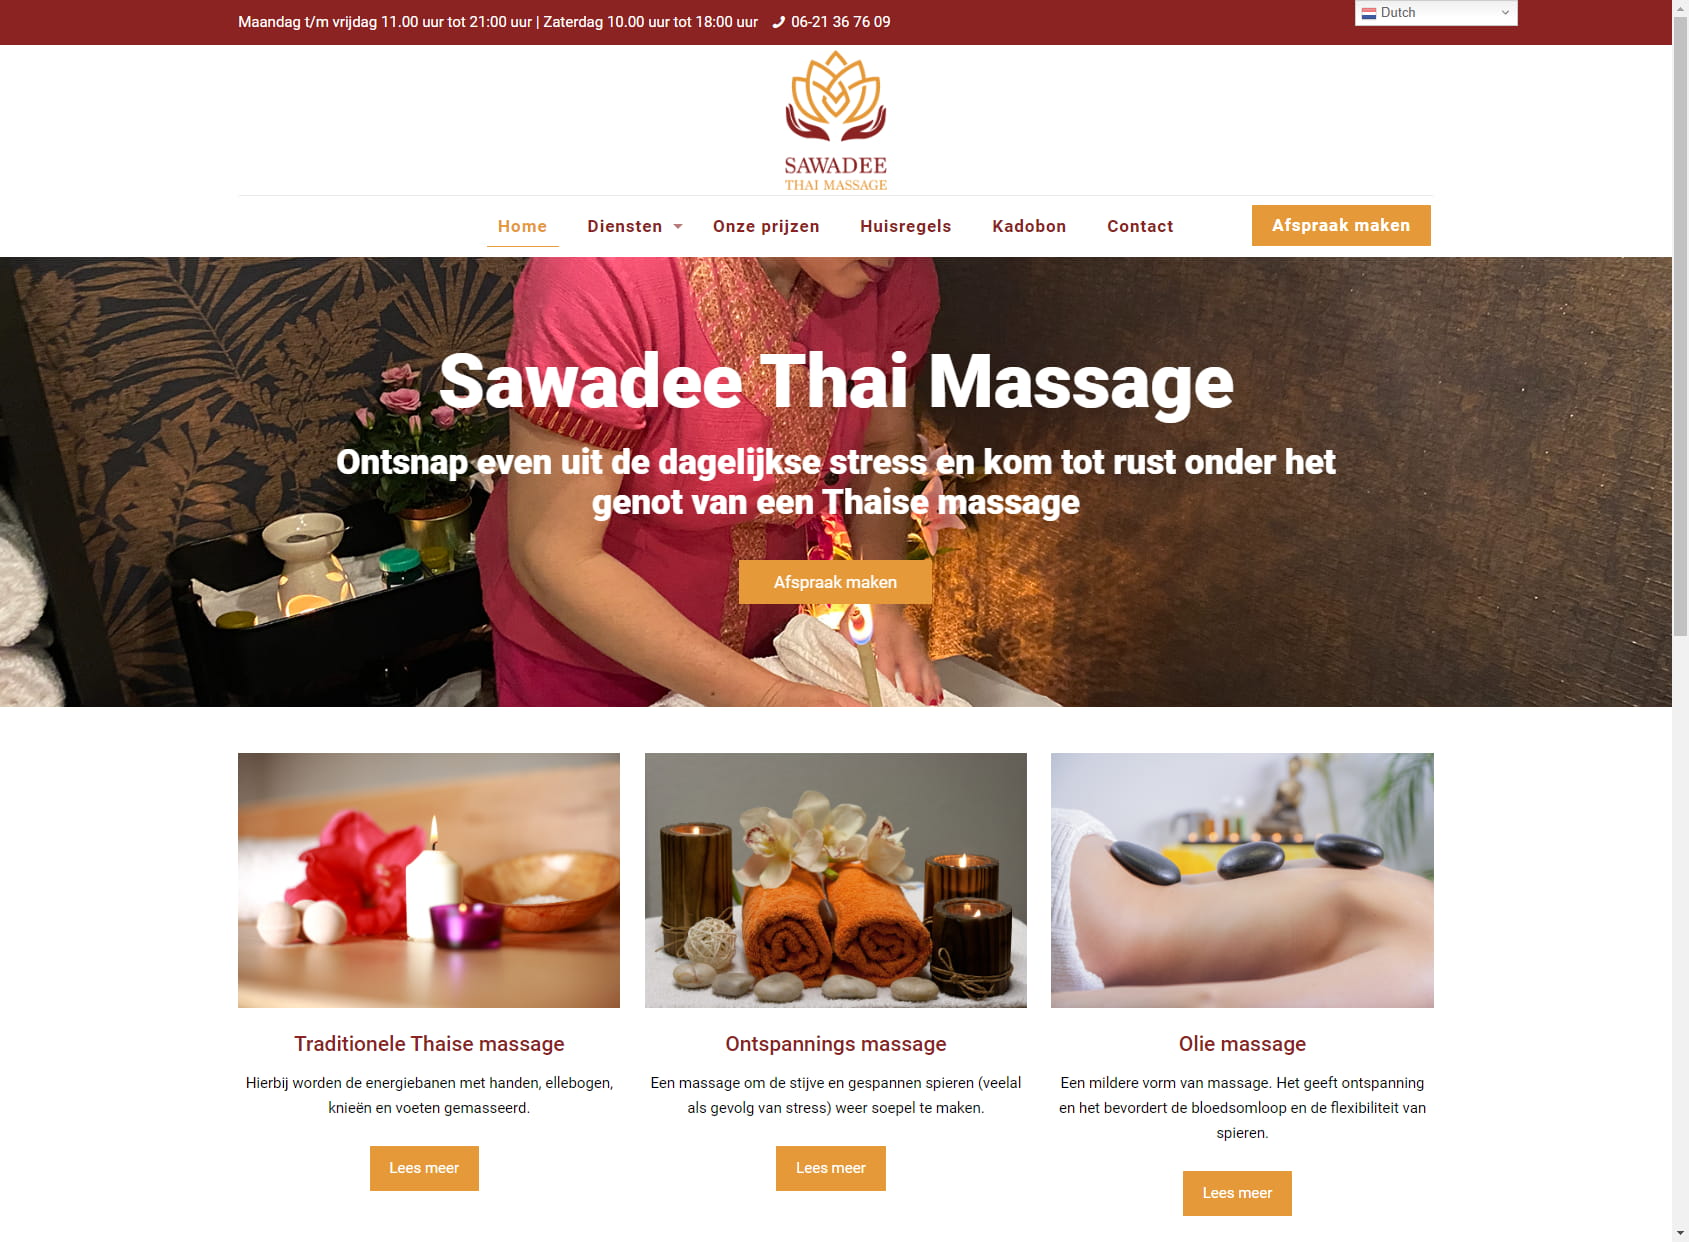 Sawadee Thai massage